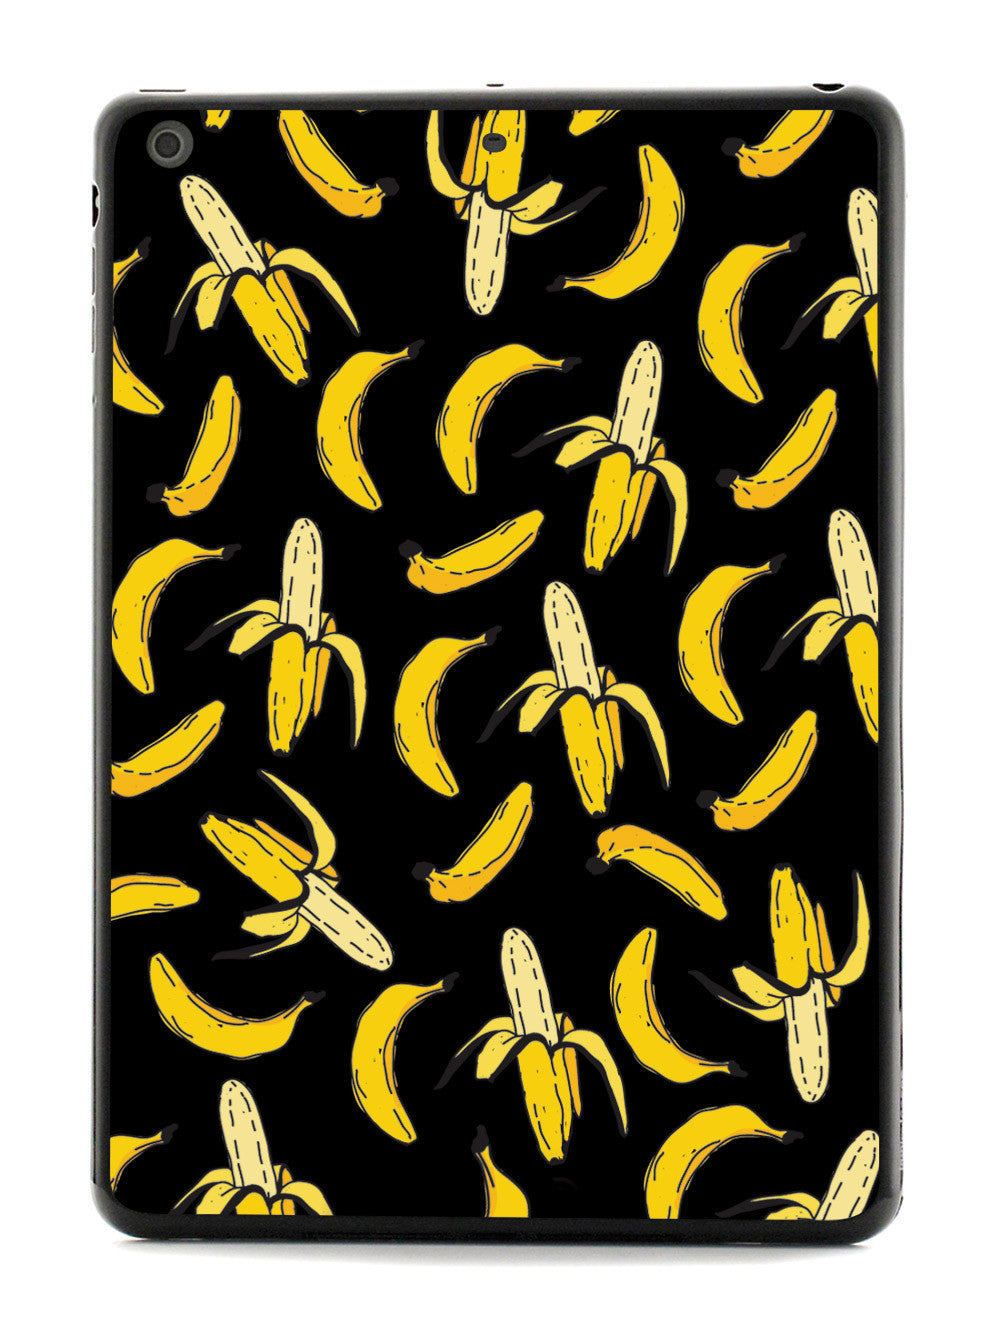 Banana Pattern Case